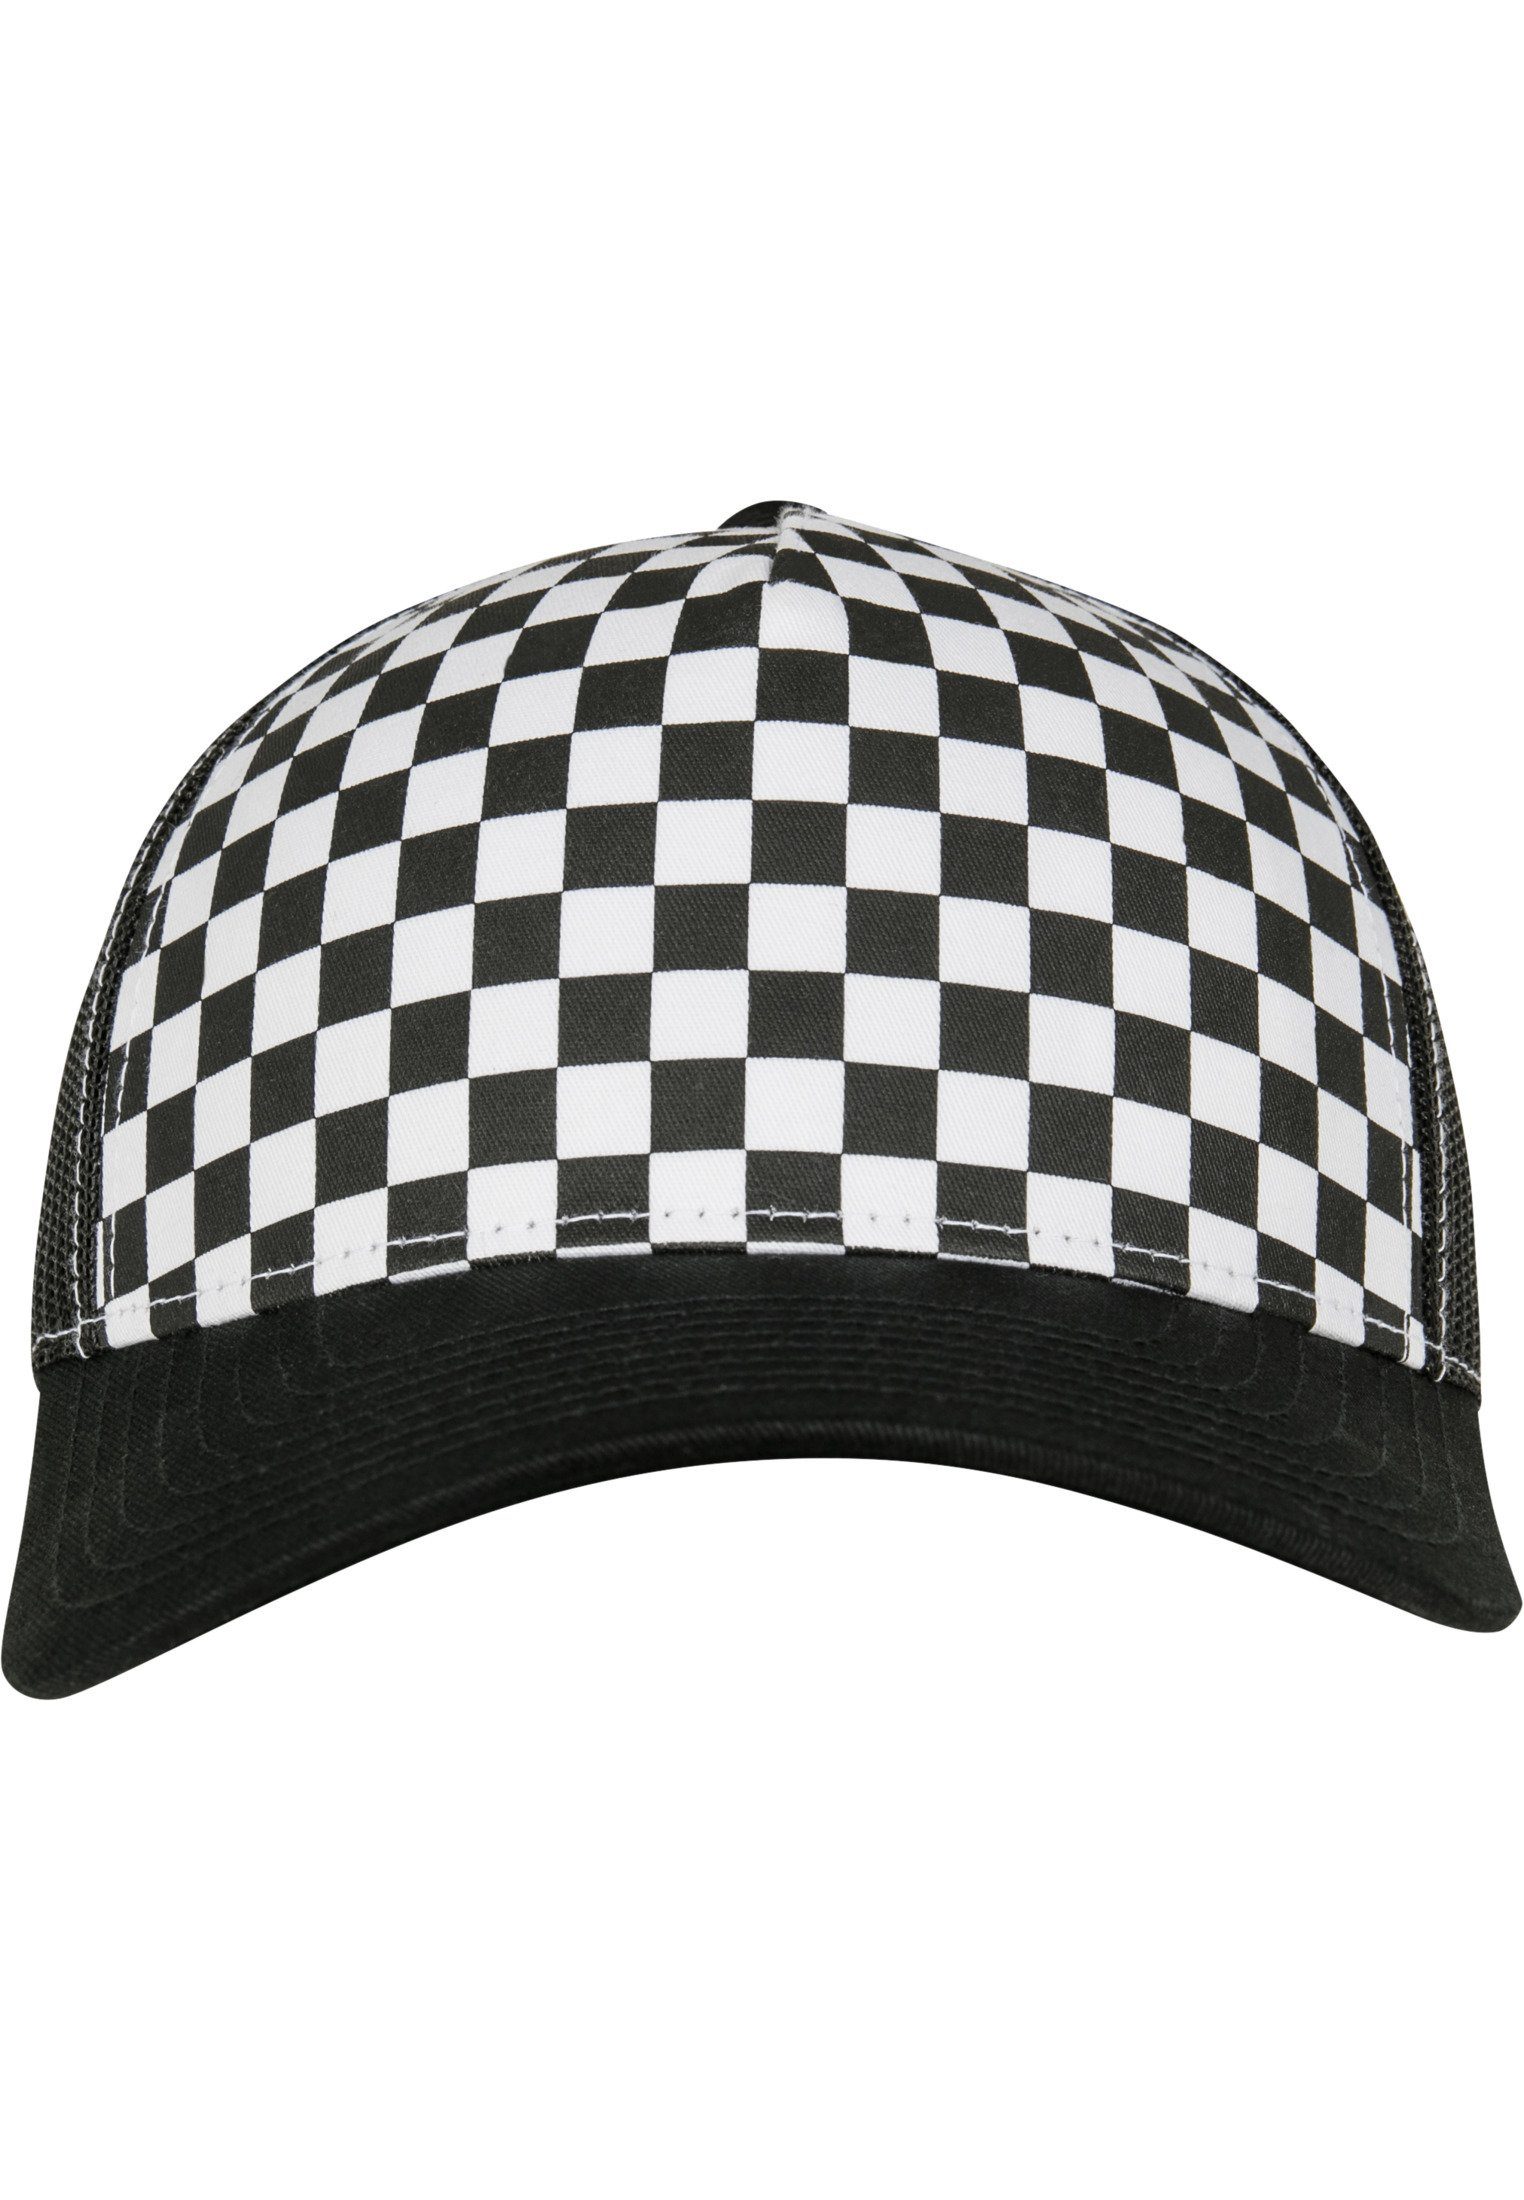 Flexfit Checkerboard black/white Trucker Retro Trucker Cap Flex